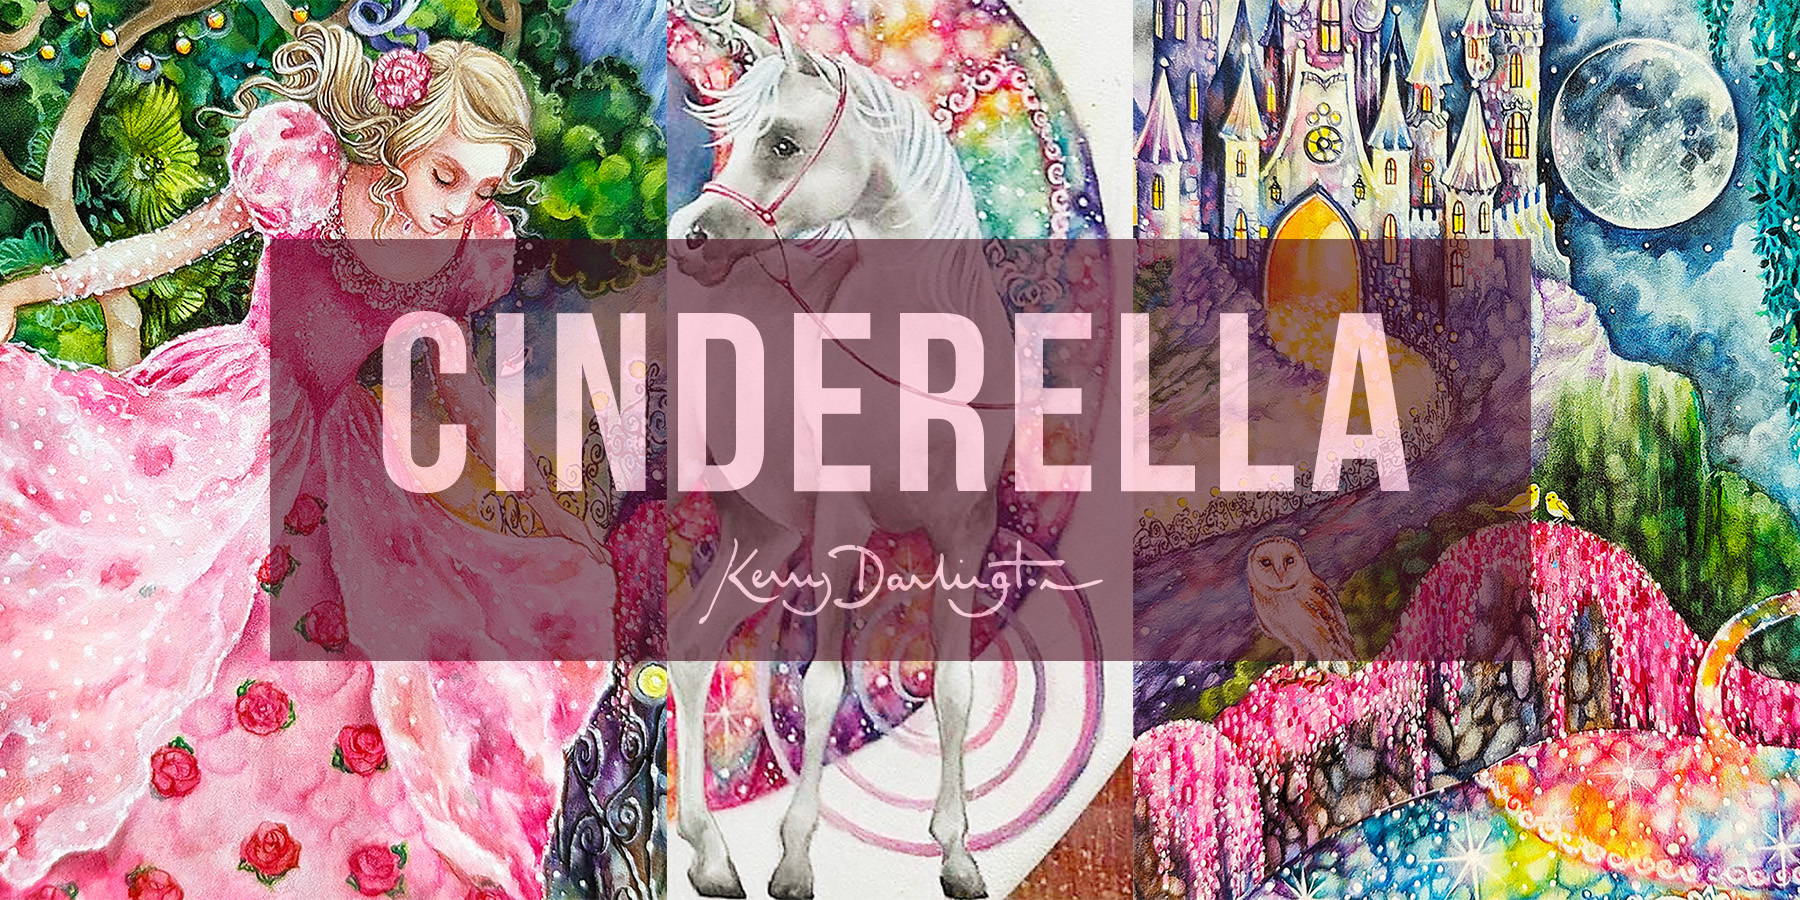 'Cinderella' New Enchanting Artwork From Kerry Darlington